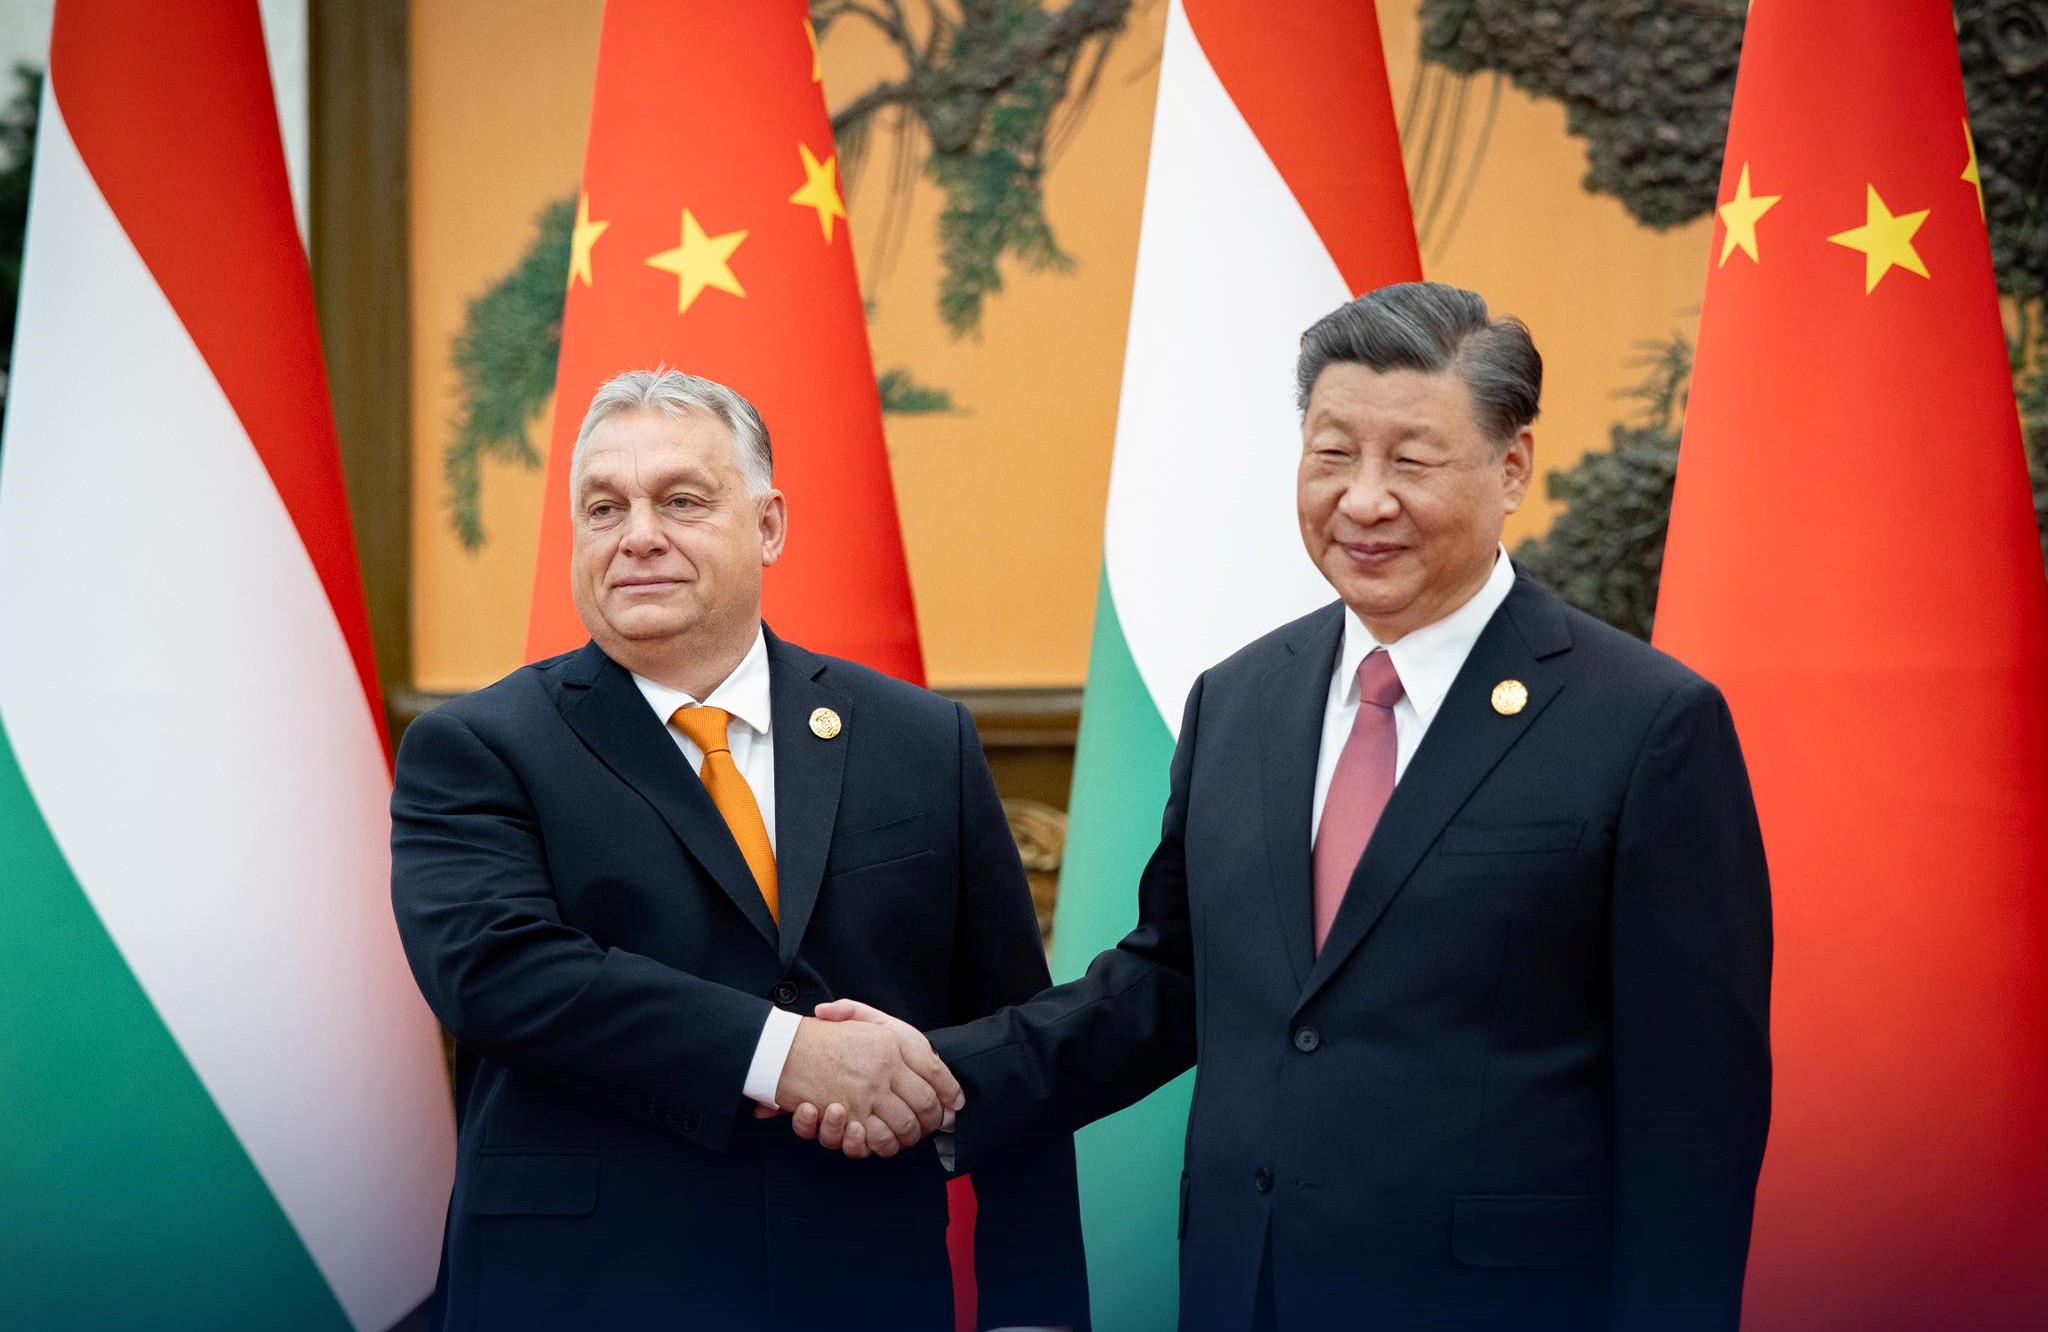 Ambassador Expects Hungary to Pursue “Rational and Pragmatic Policy” towards China